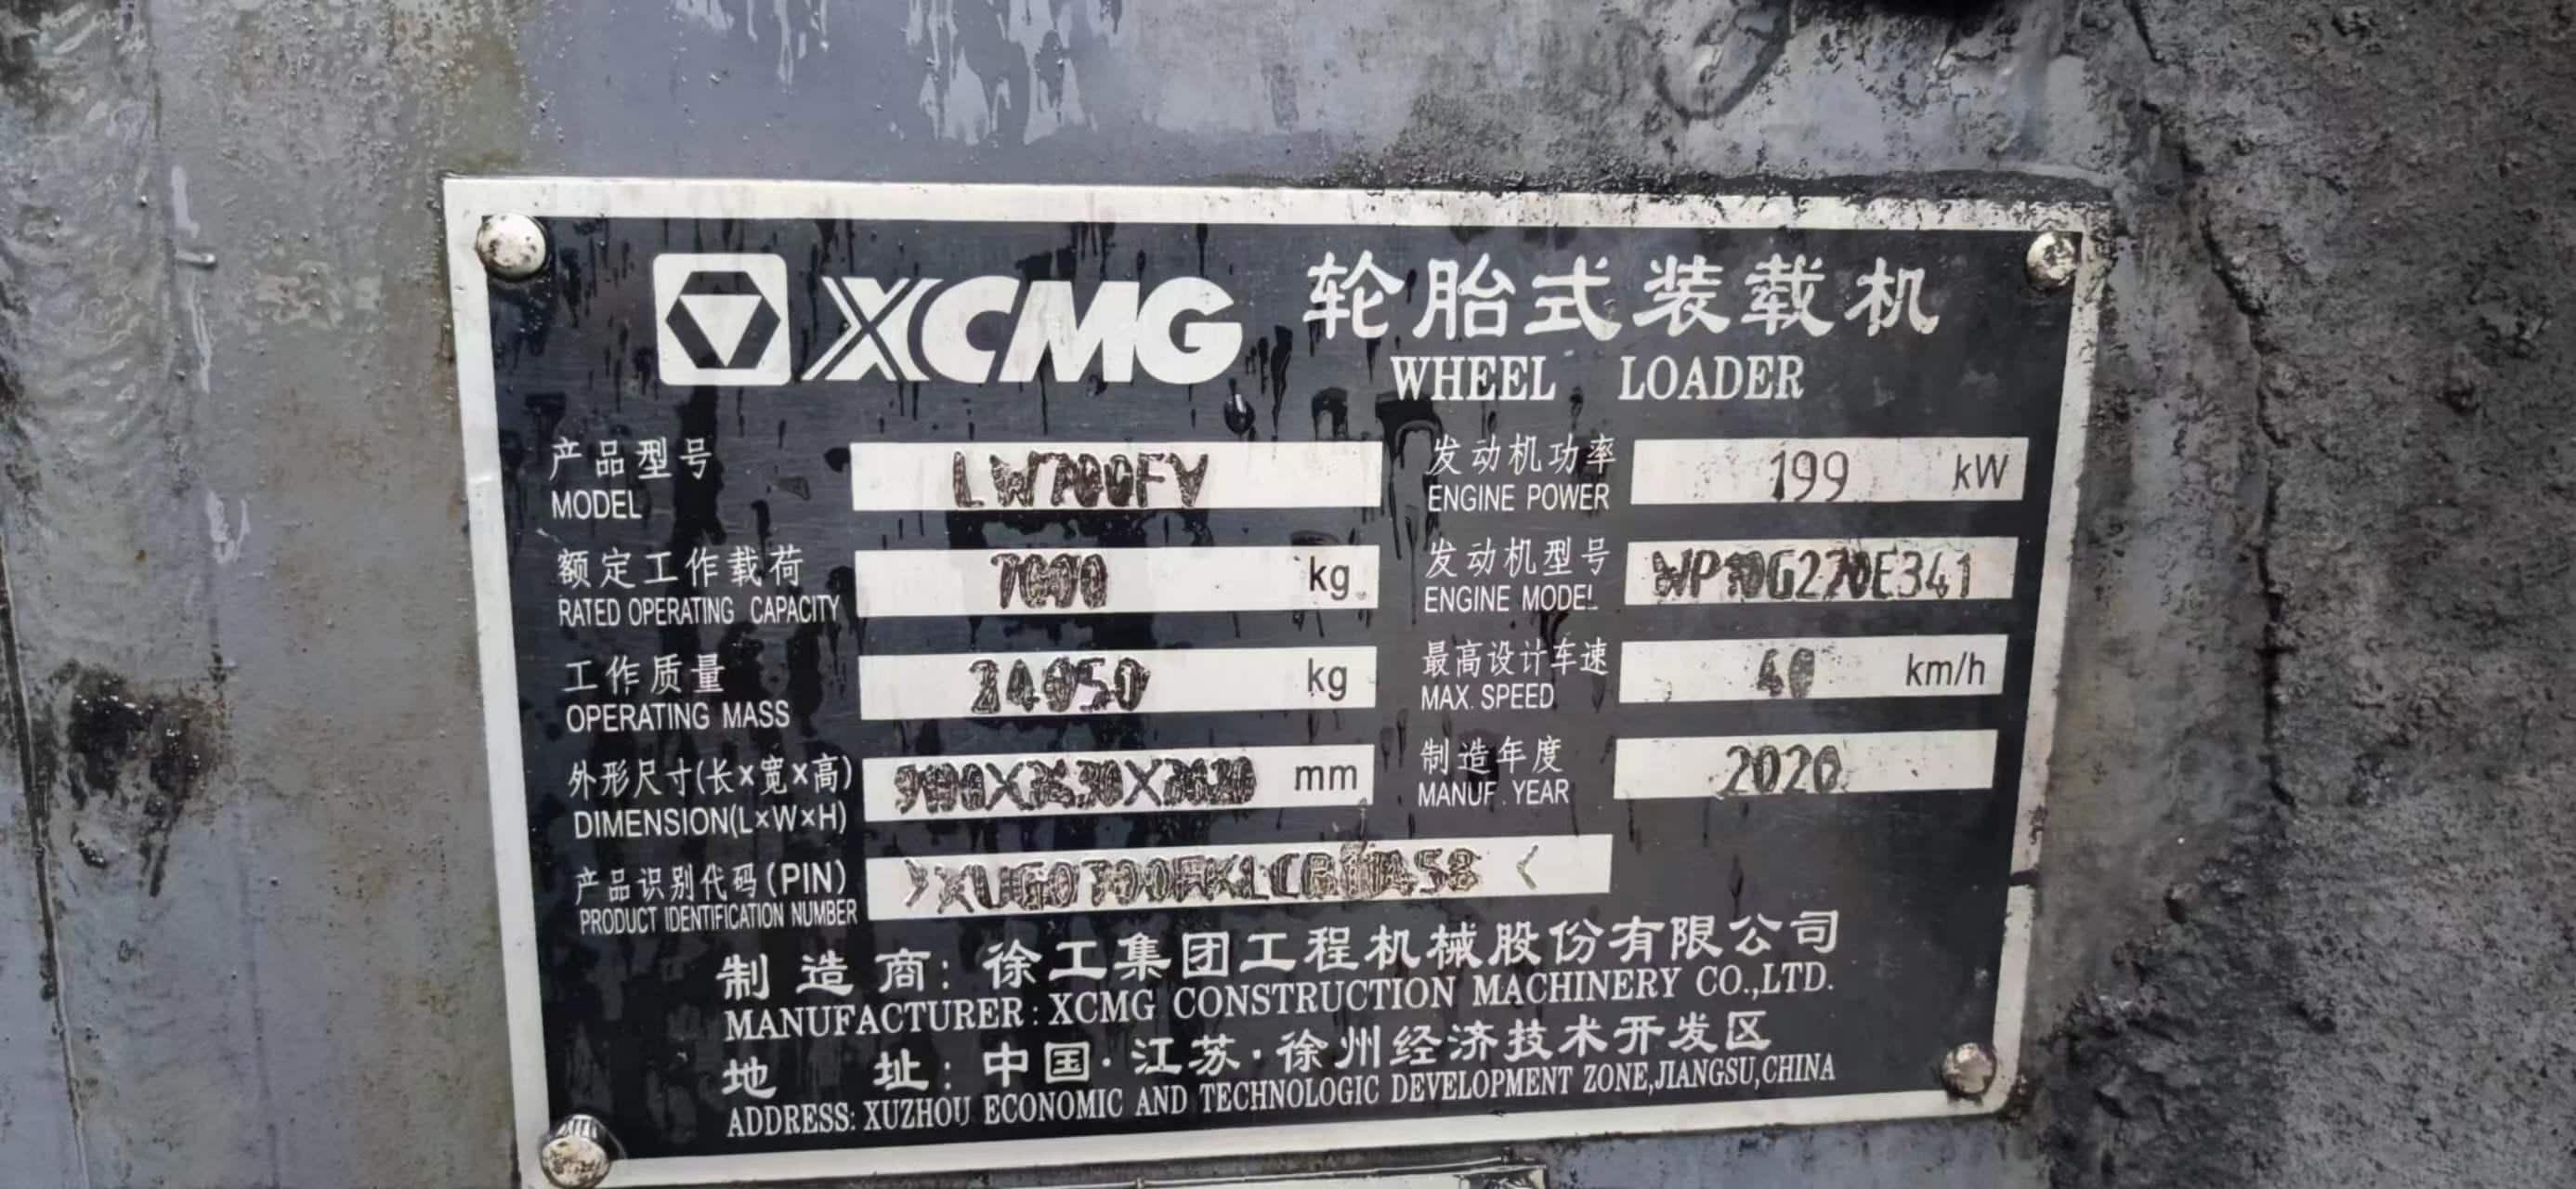 XCMG second hand wheel loader LW700FV